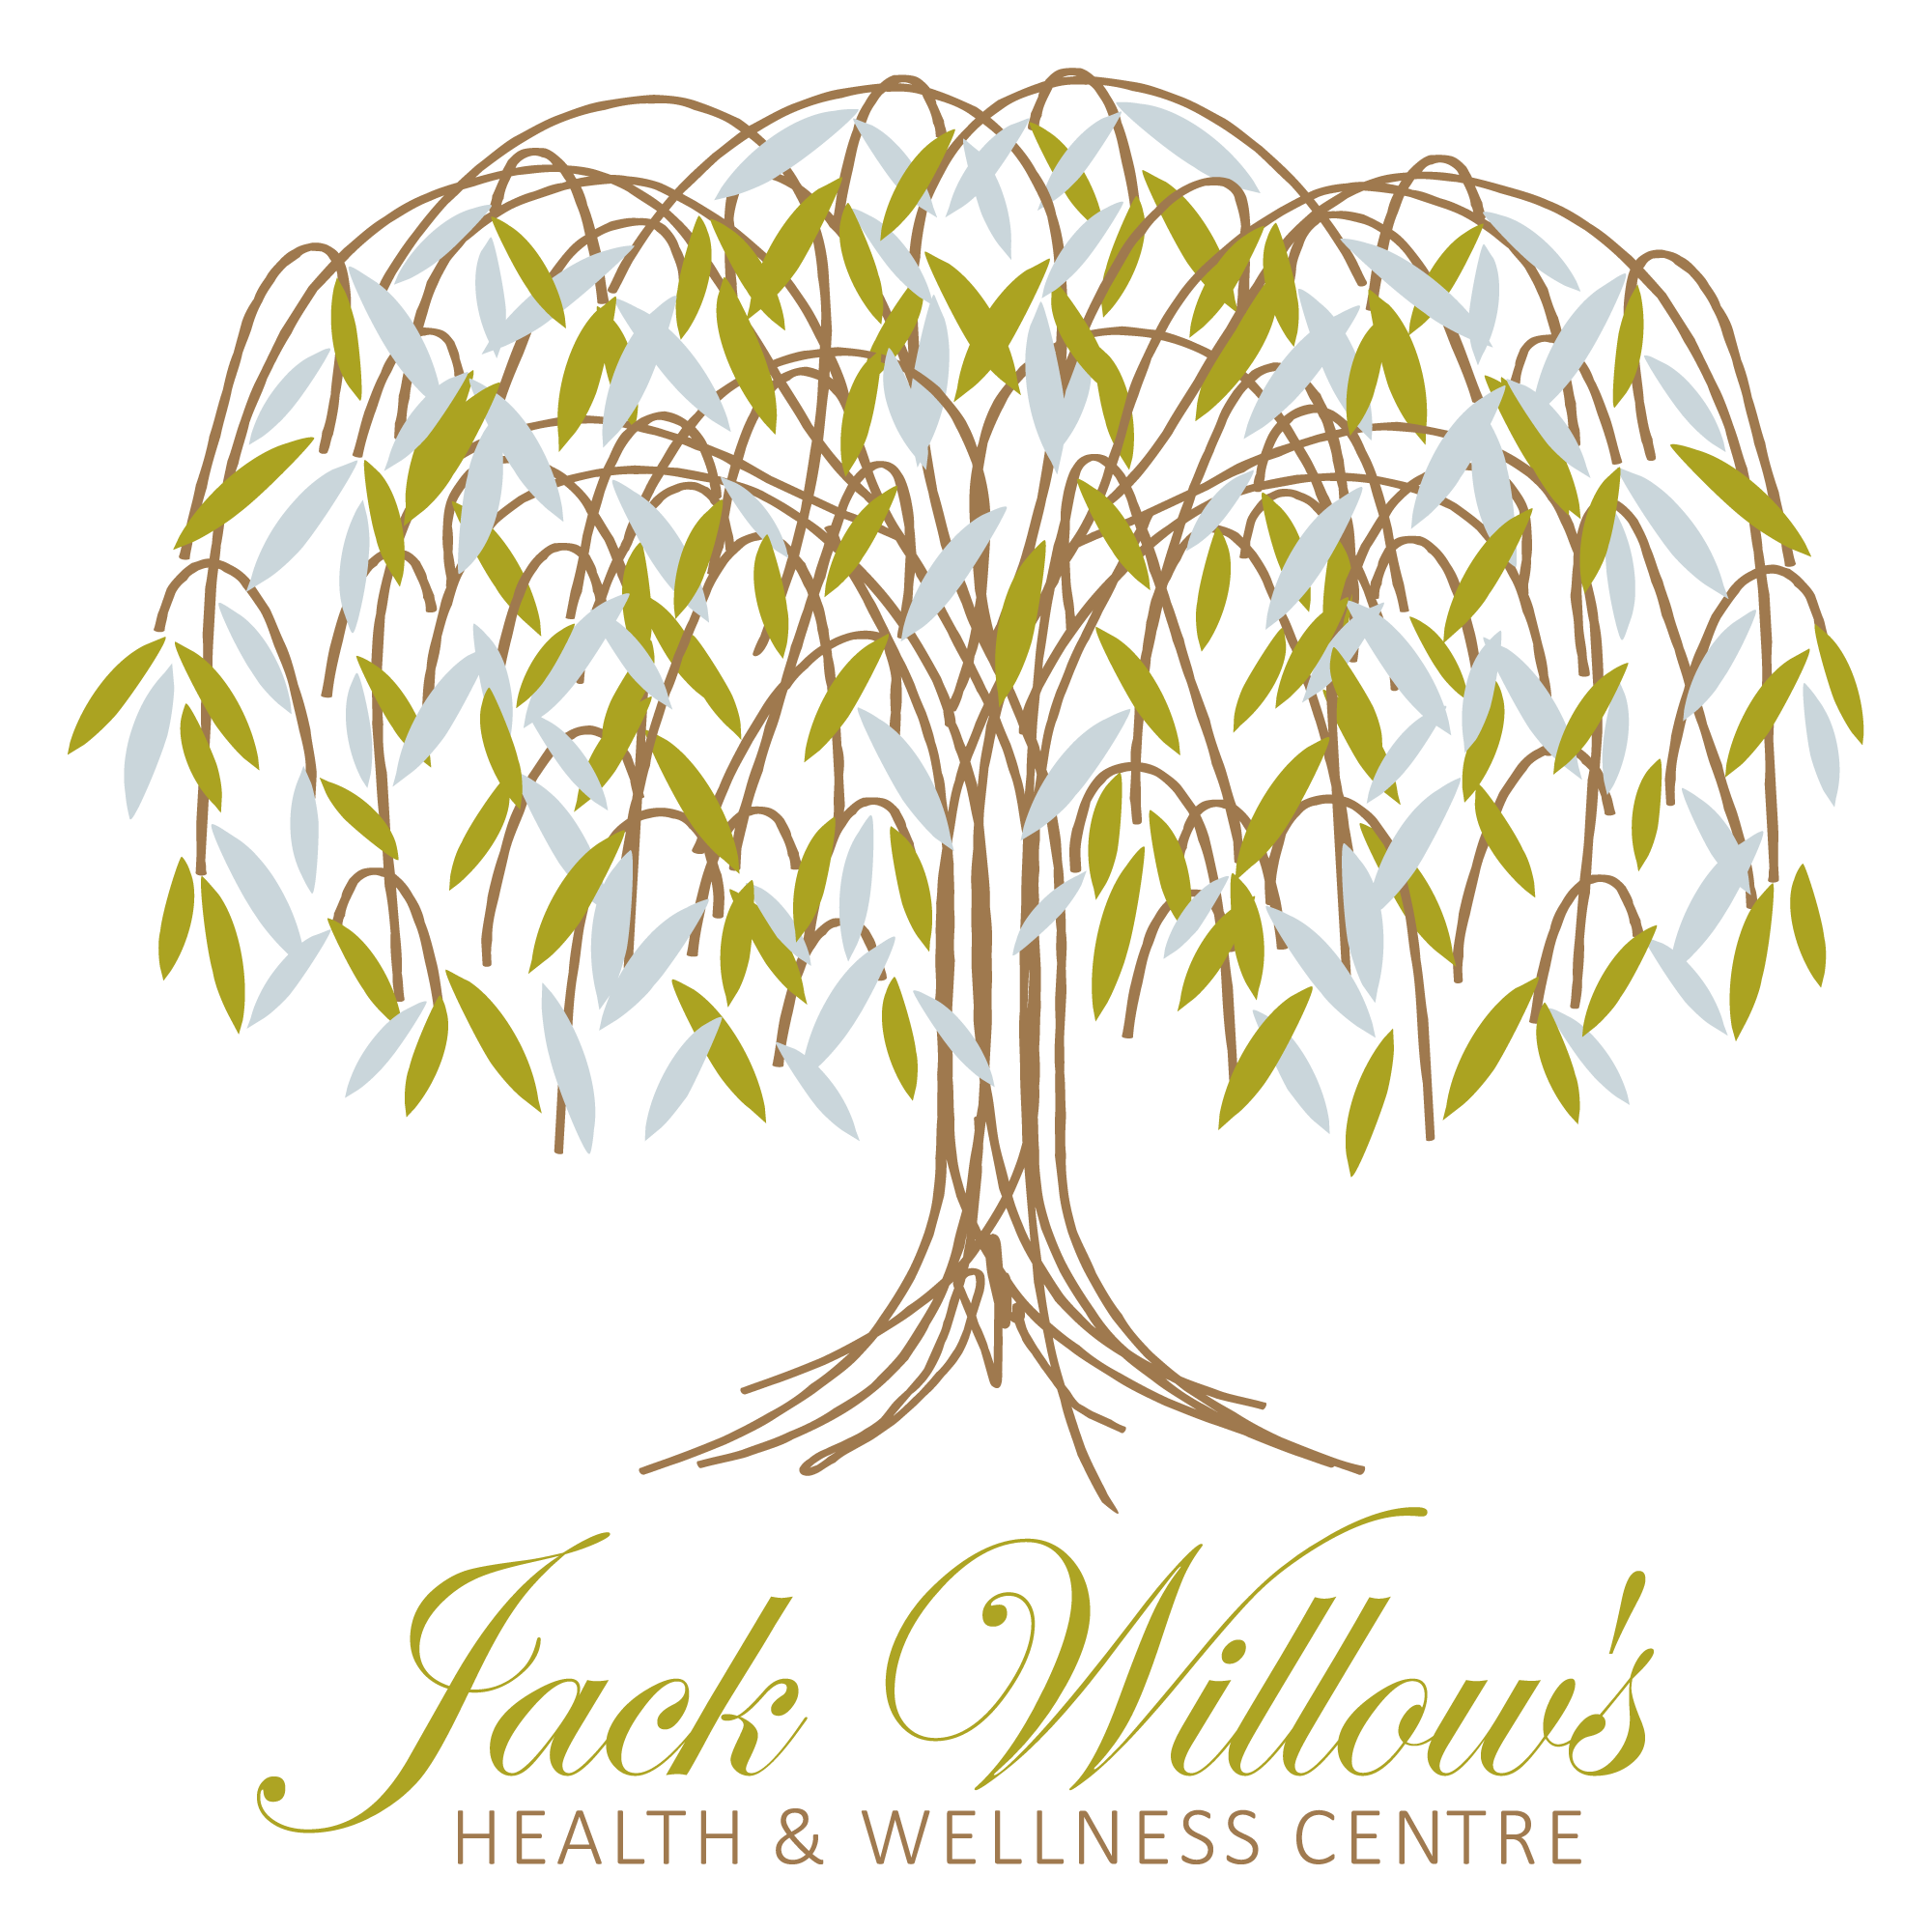 Jack Willows Health & Wellness